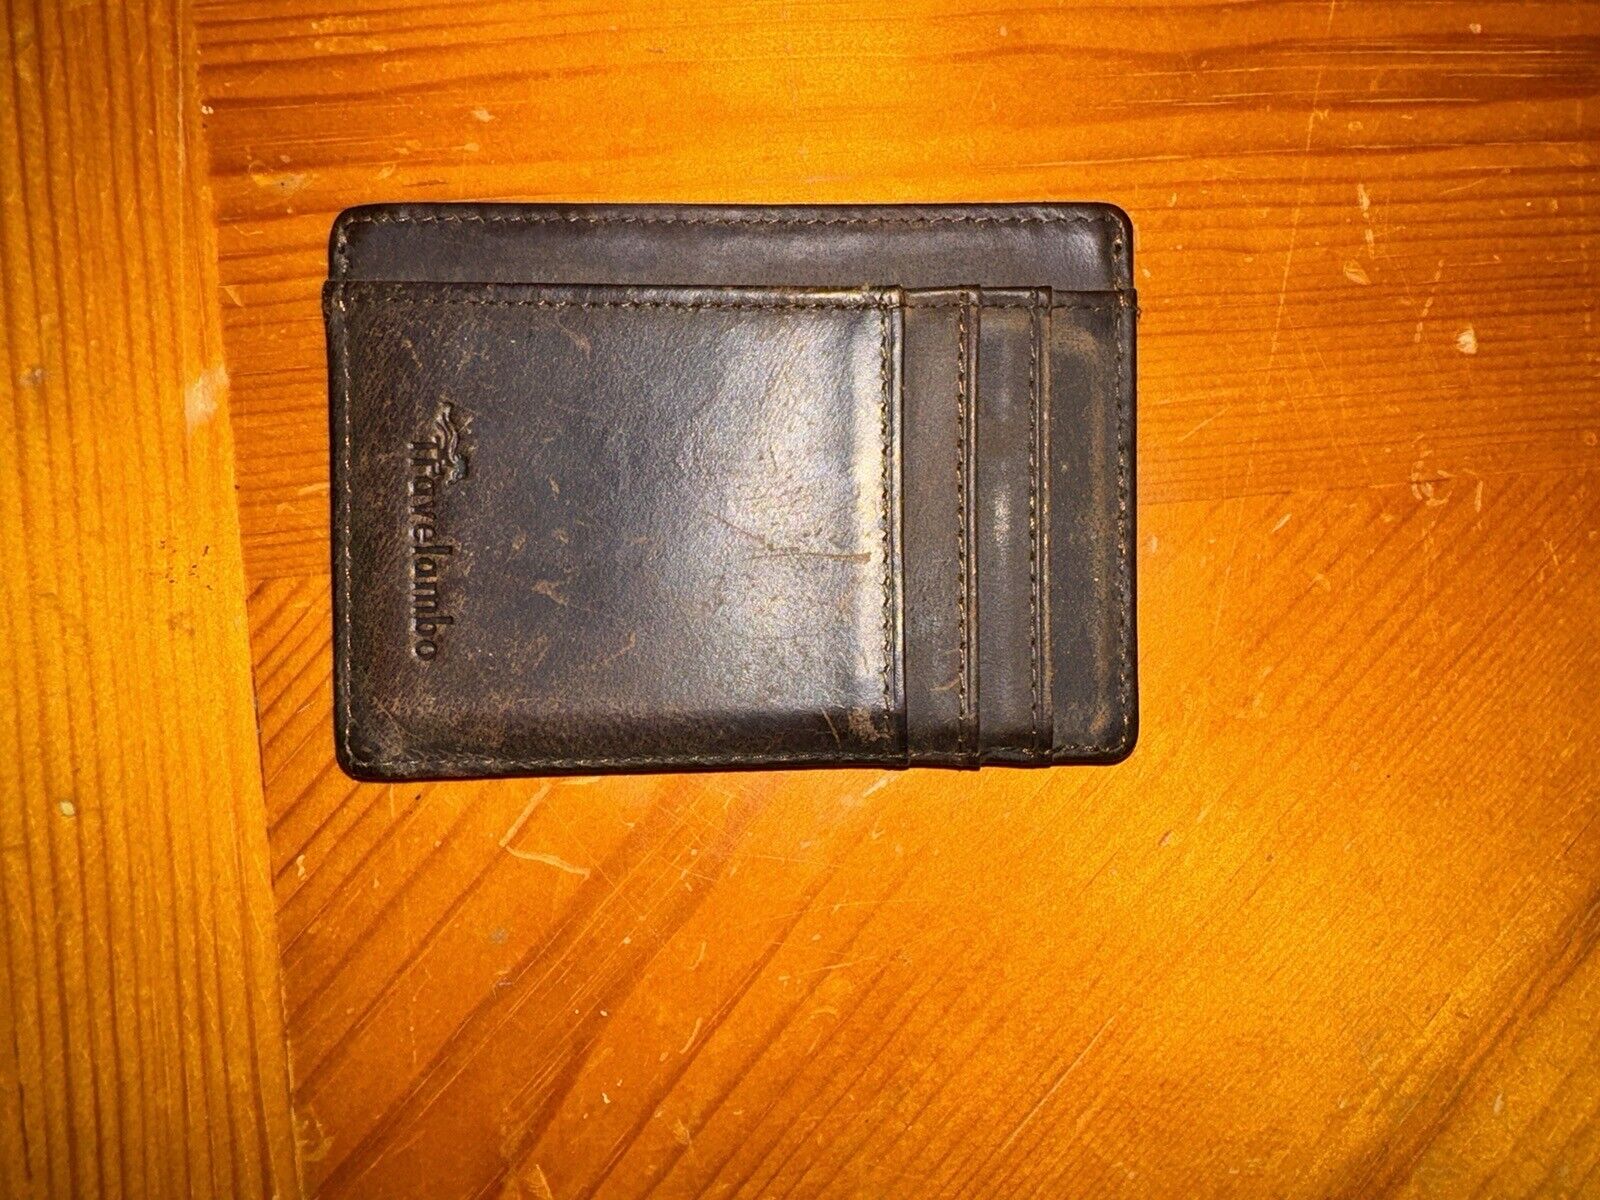 Travelambo Front Pocket Minimalist Leather Slim Wallet RFID Blocking Medium